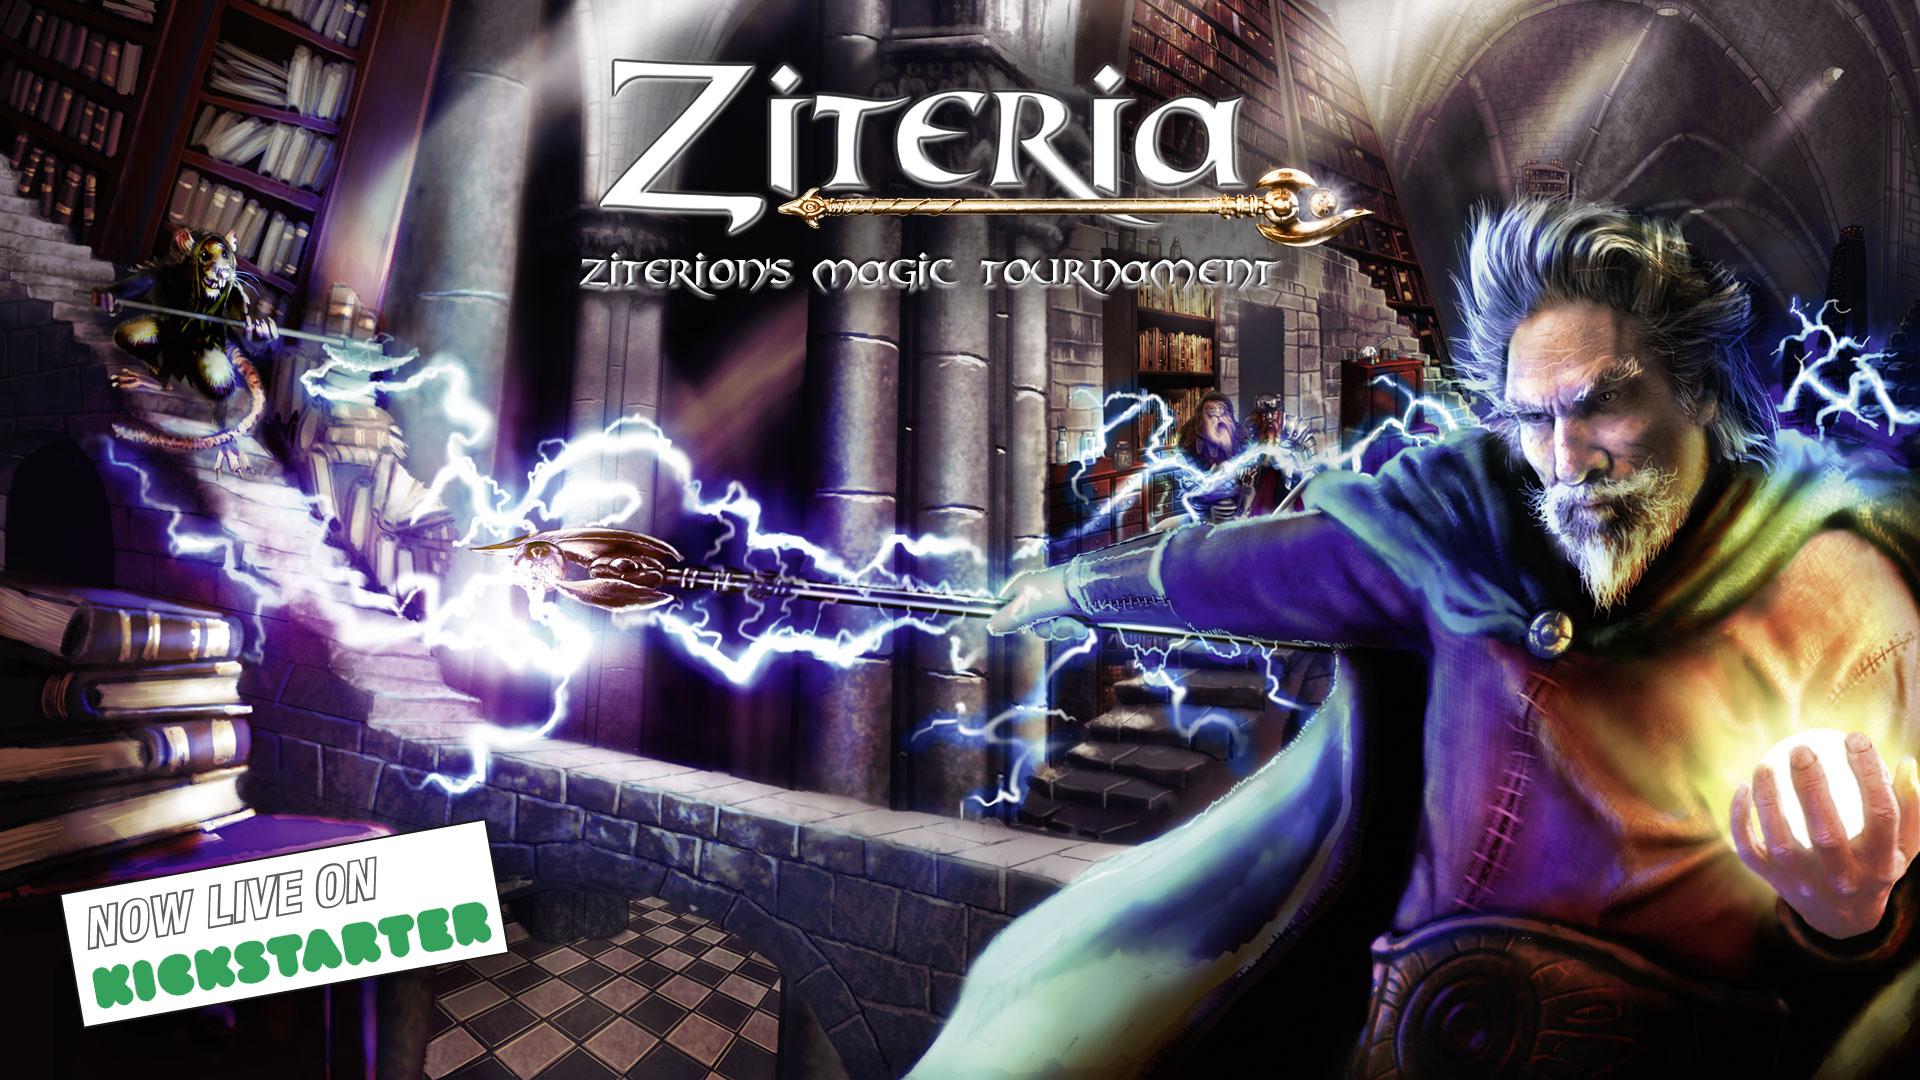 New and now live on KICKSTARTER – ZITERIA Ziterion’s Magic Tournament